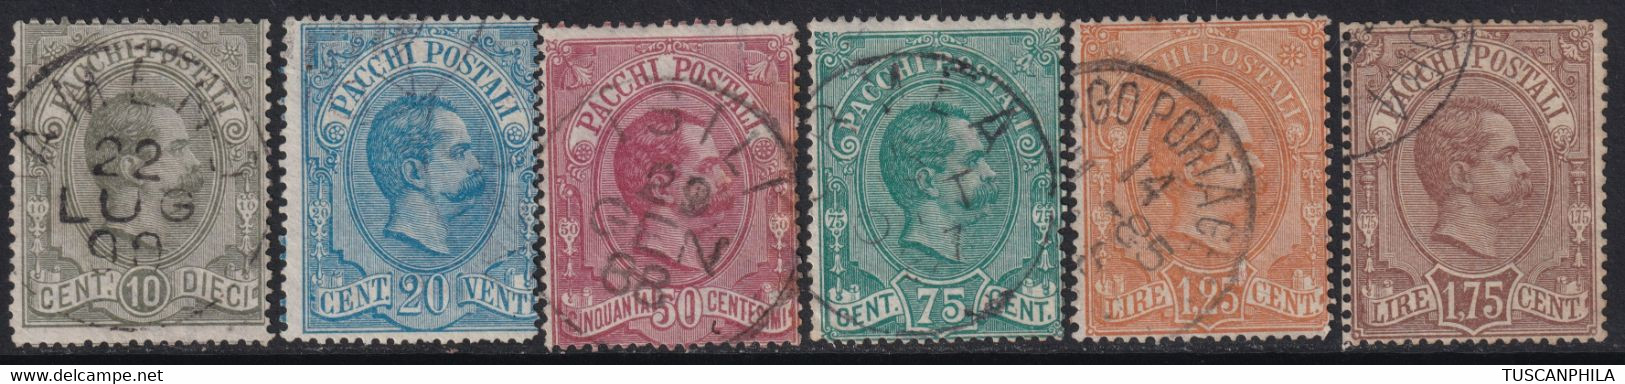 1884/86 - Umberto Pacchi Postali Serie Completa Usata F.Ray, Colla - Sassone S.2100 - Postal Parcels